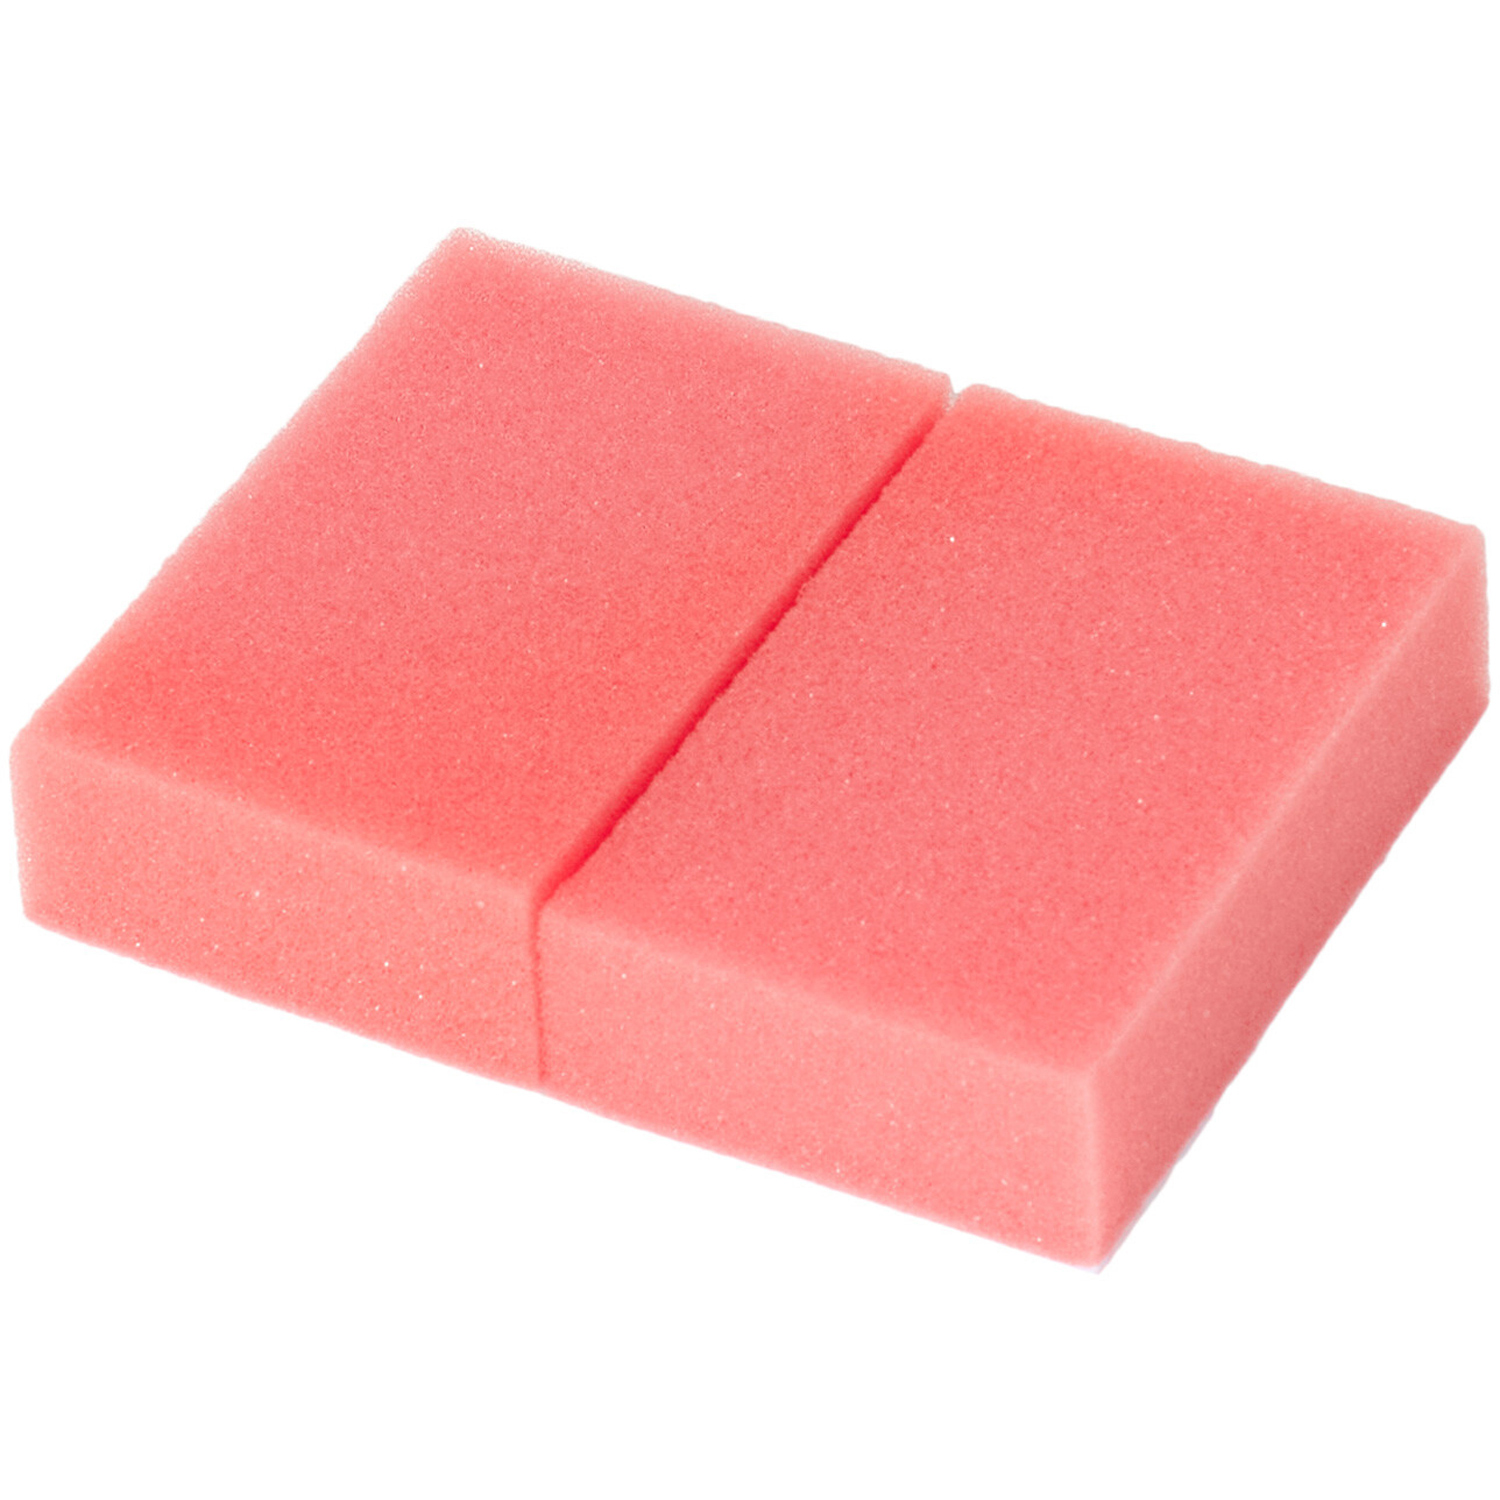 Daisy Pink Sponge 2 Pack Image 3